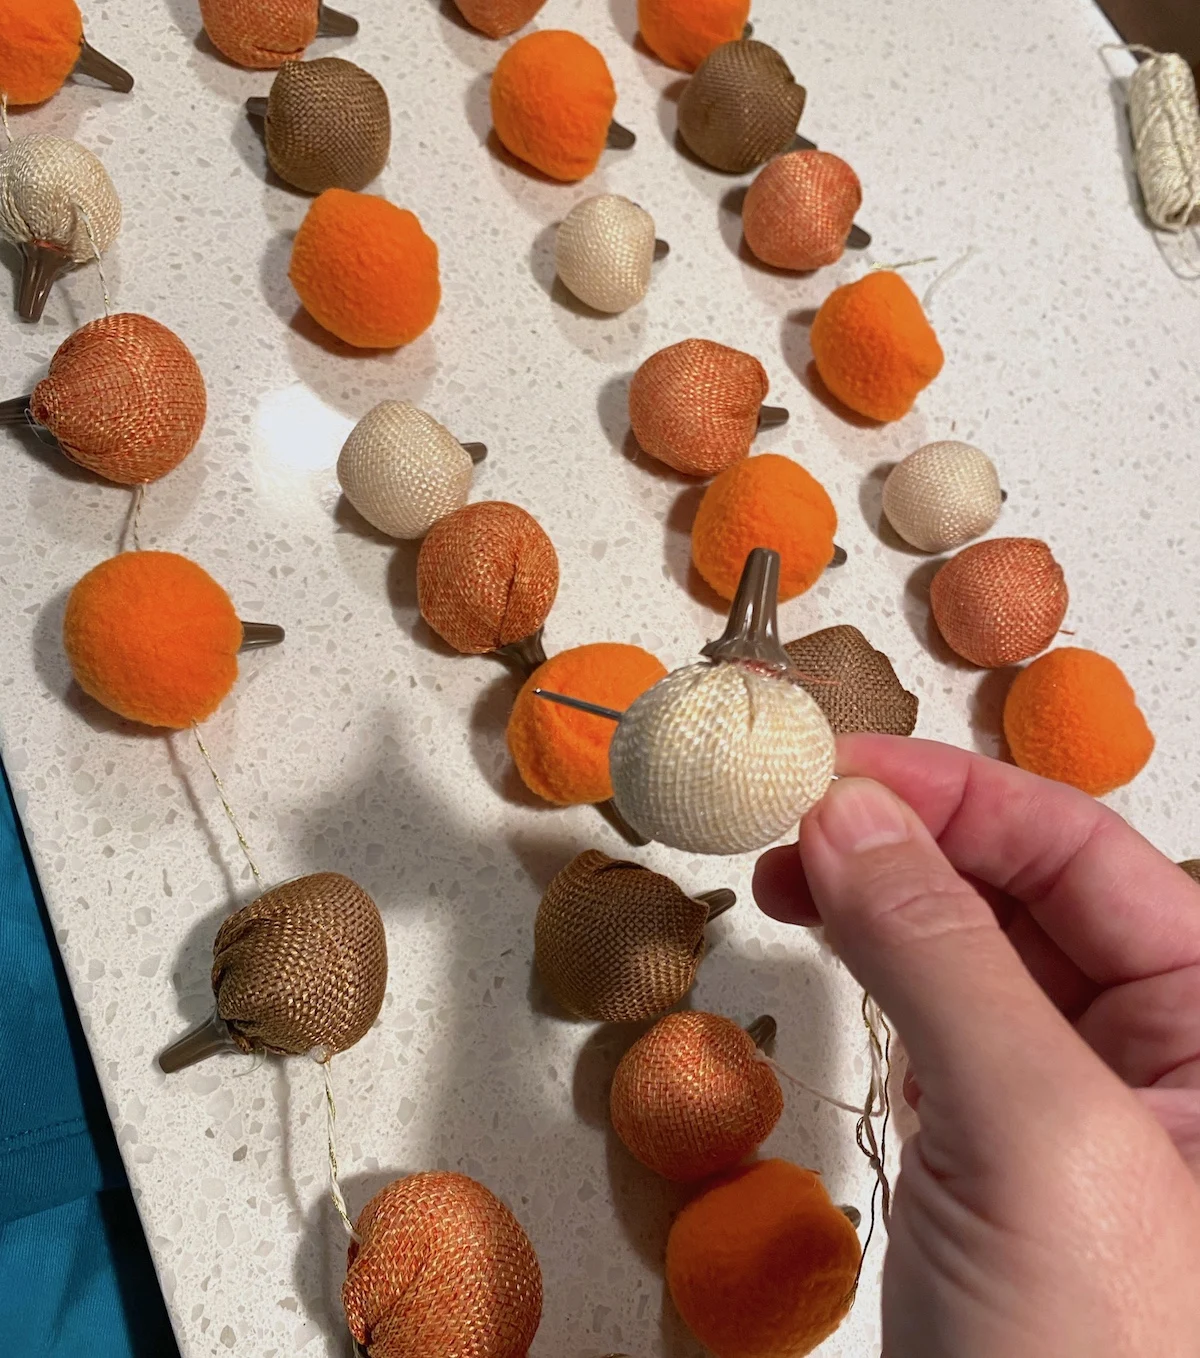 Stringing pumpkins onto a needle